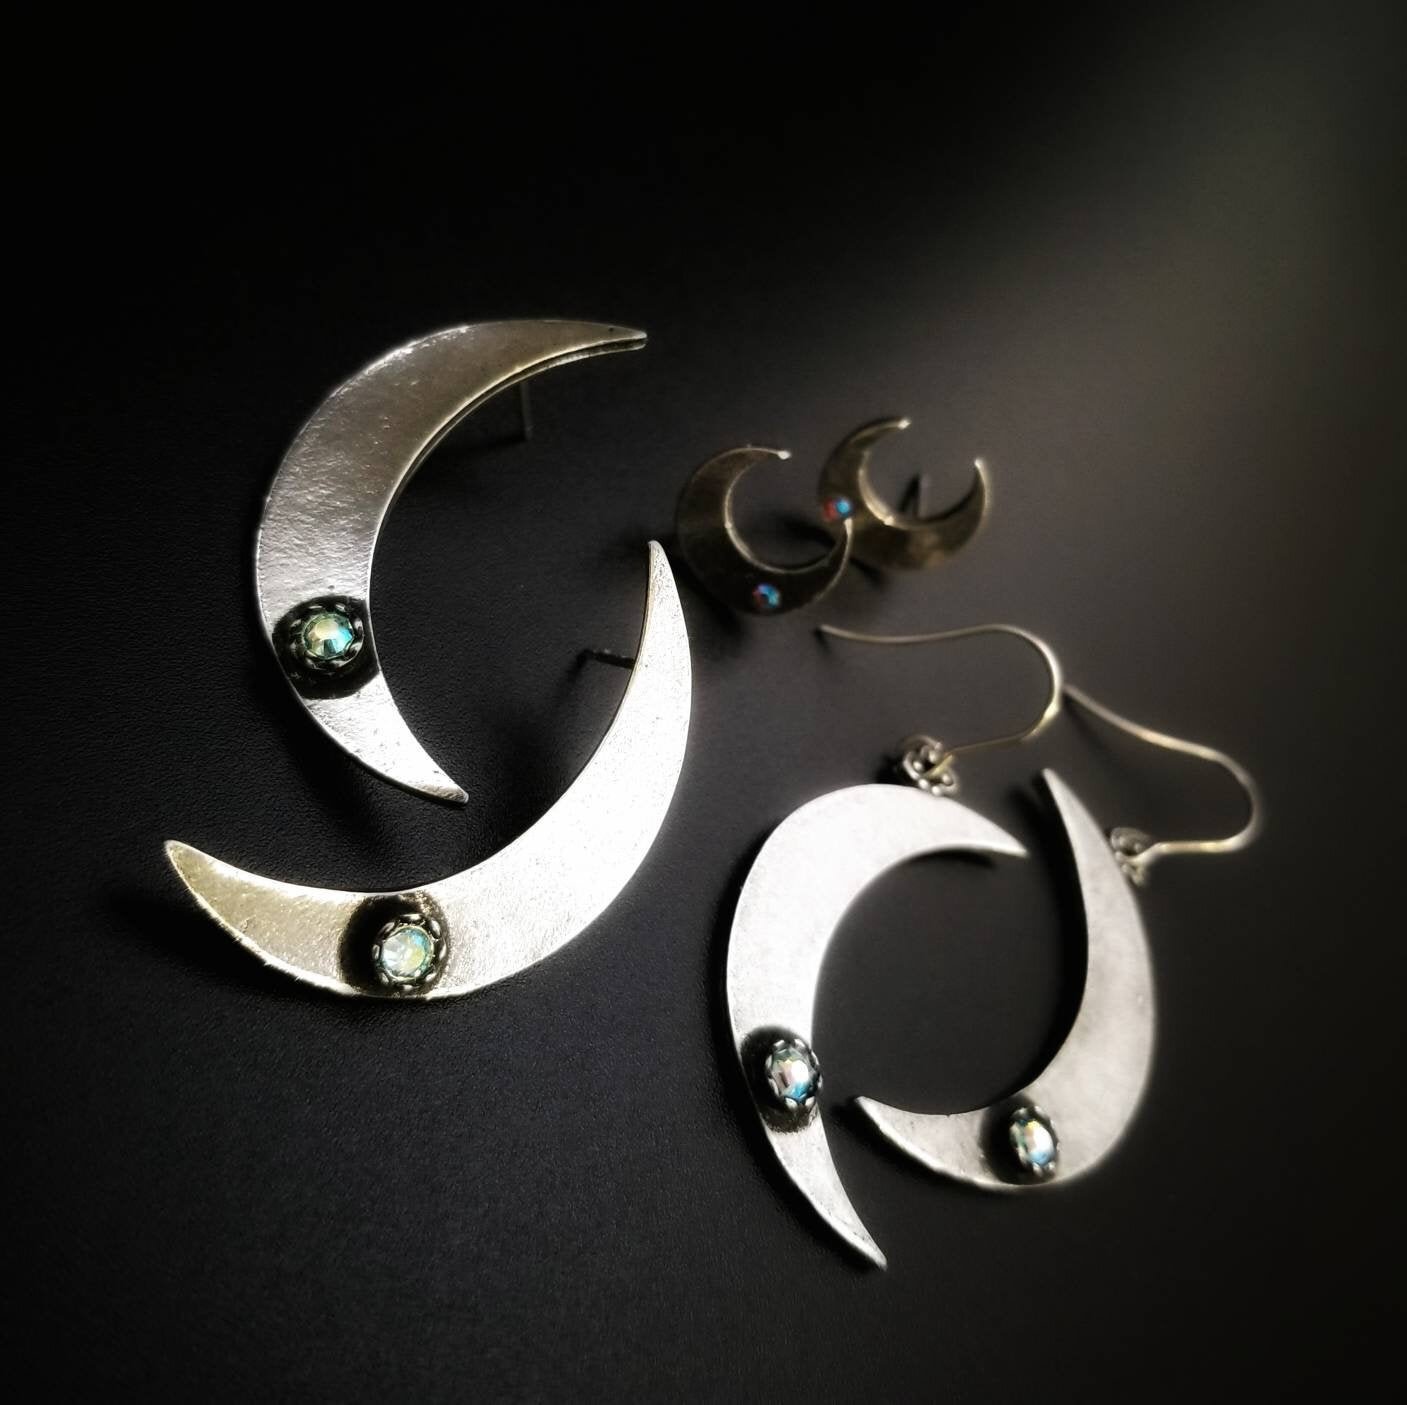 The most beautiful Half-Moon Earrings|Totapari| Accessories India